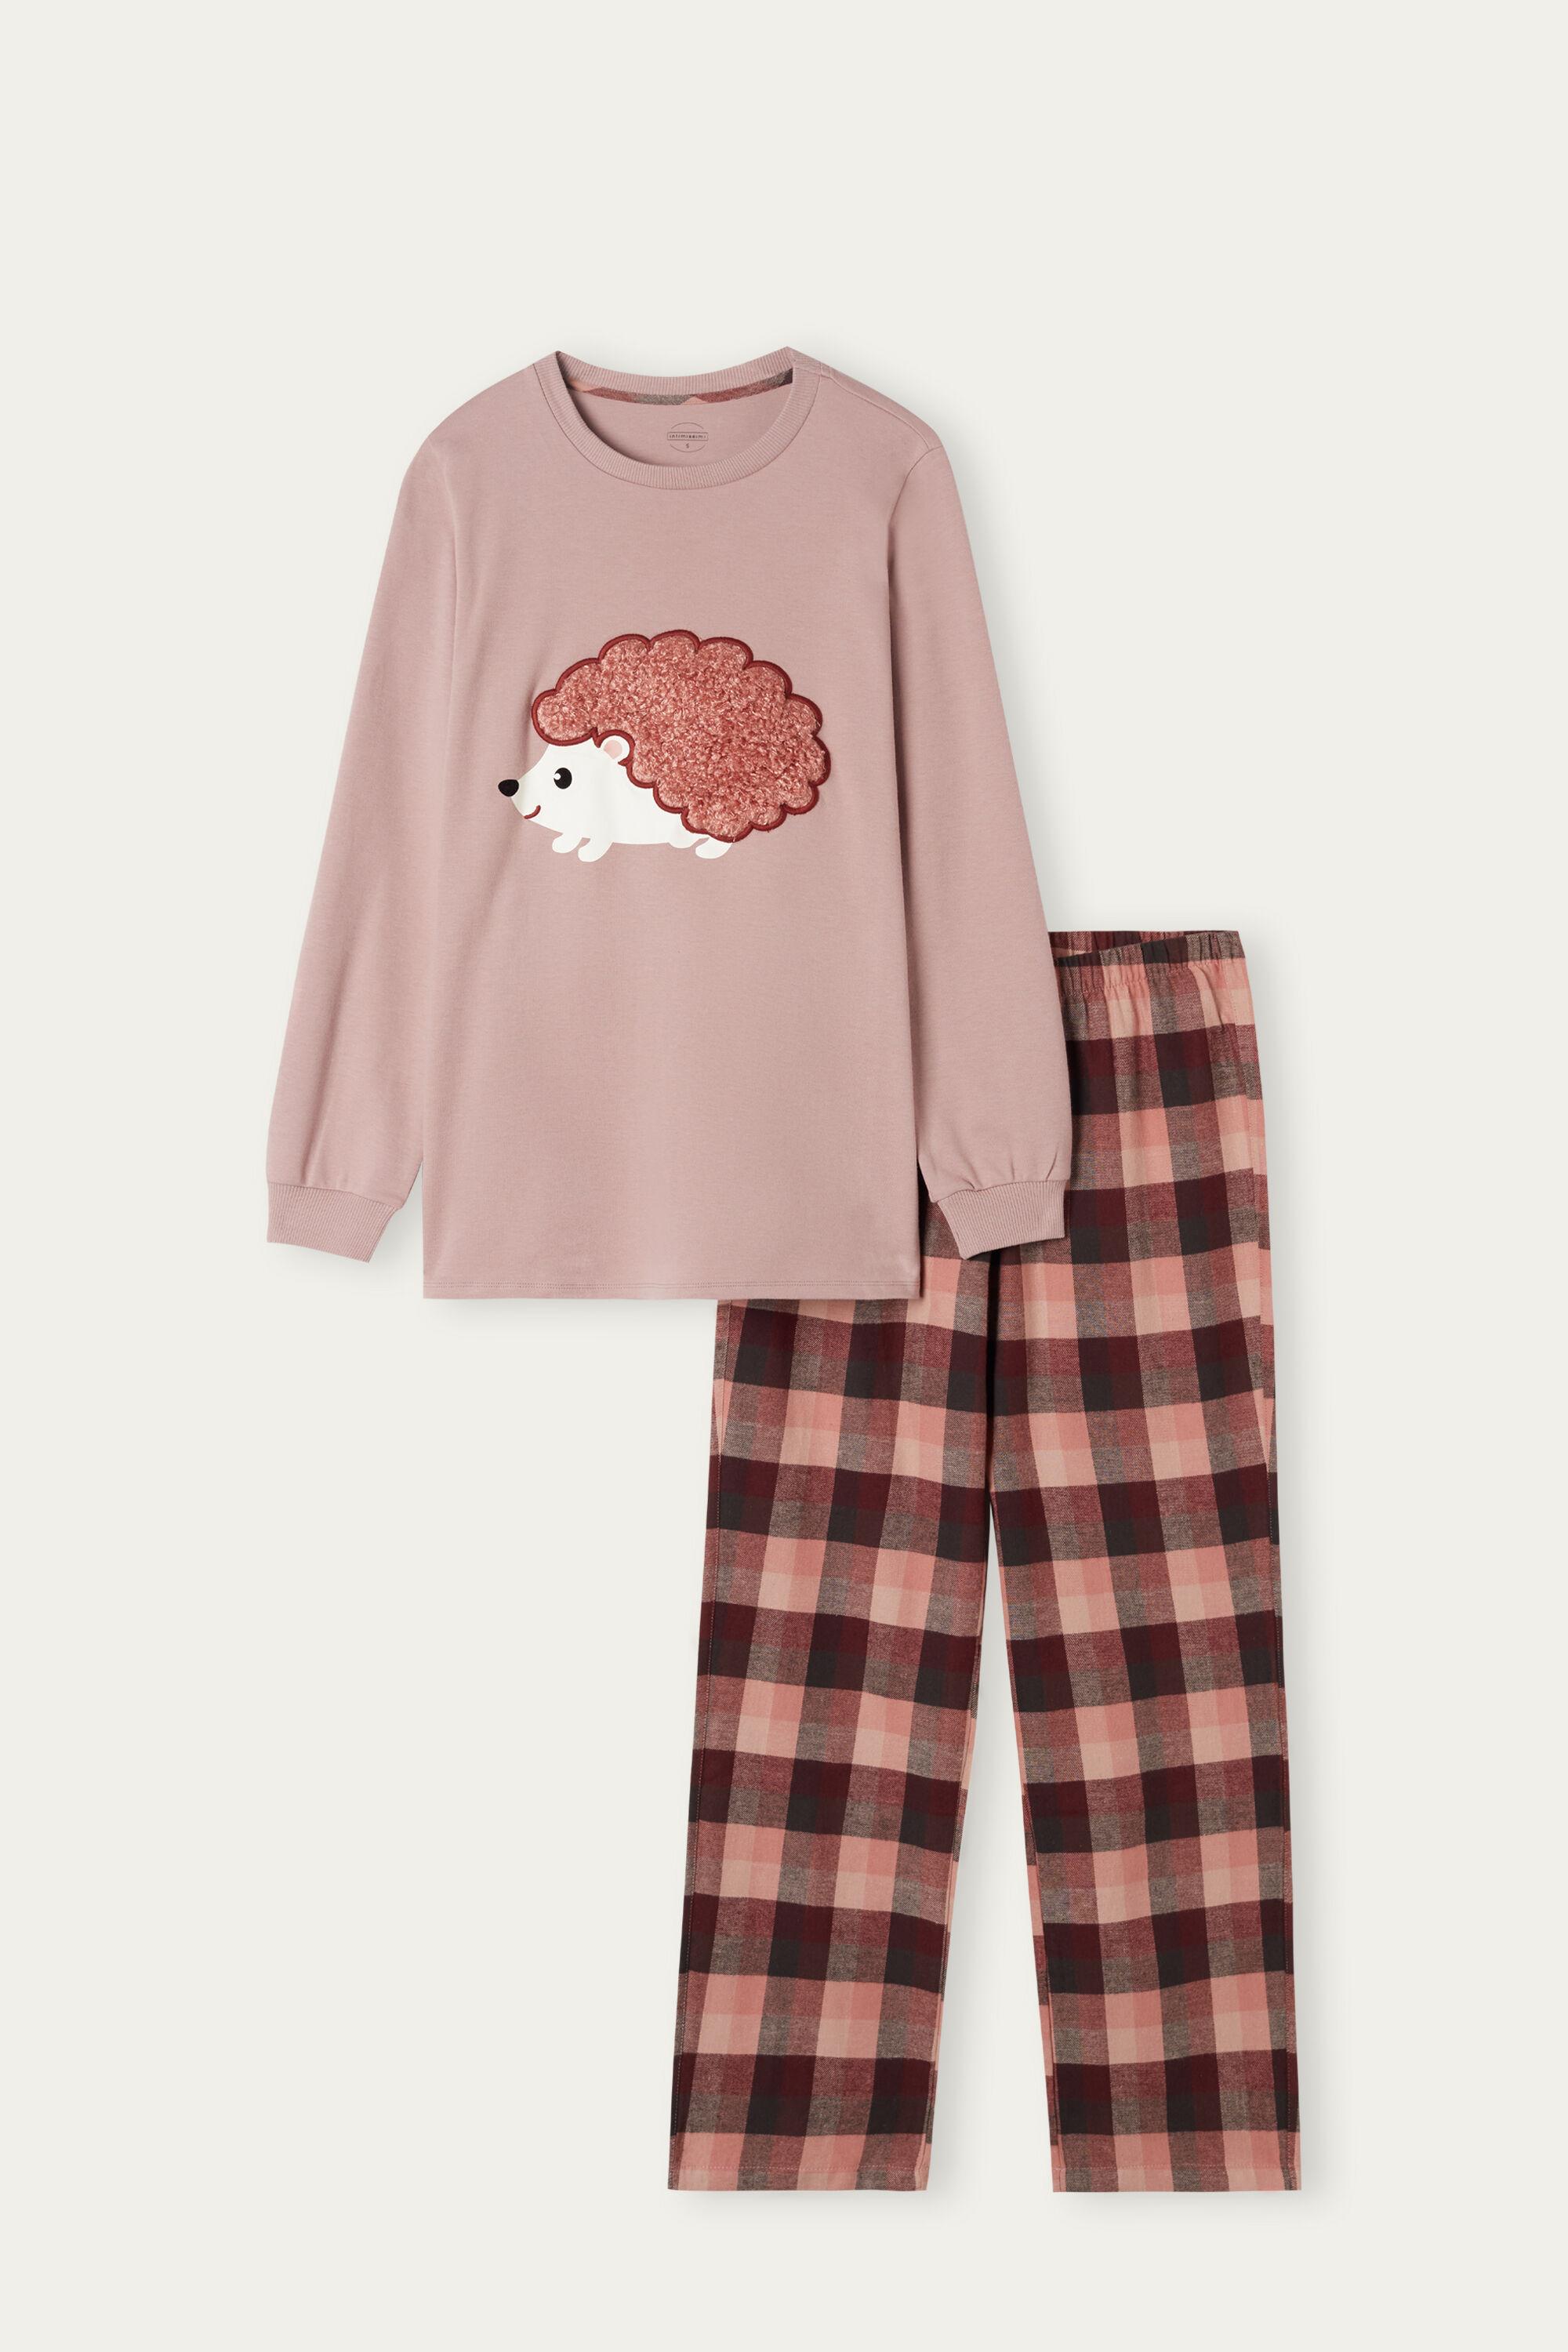 Intimissimi Hedgehog Pyjamas in Pink | Lyst